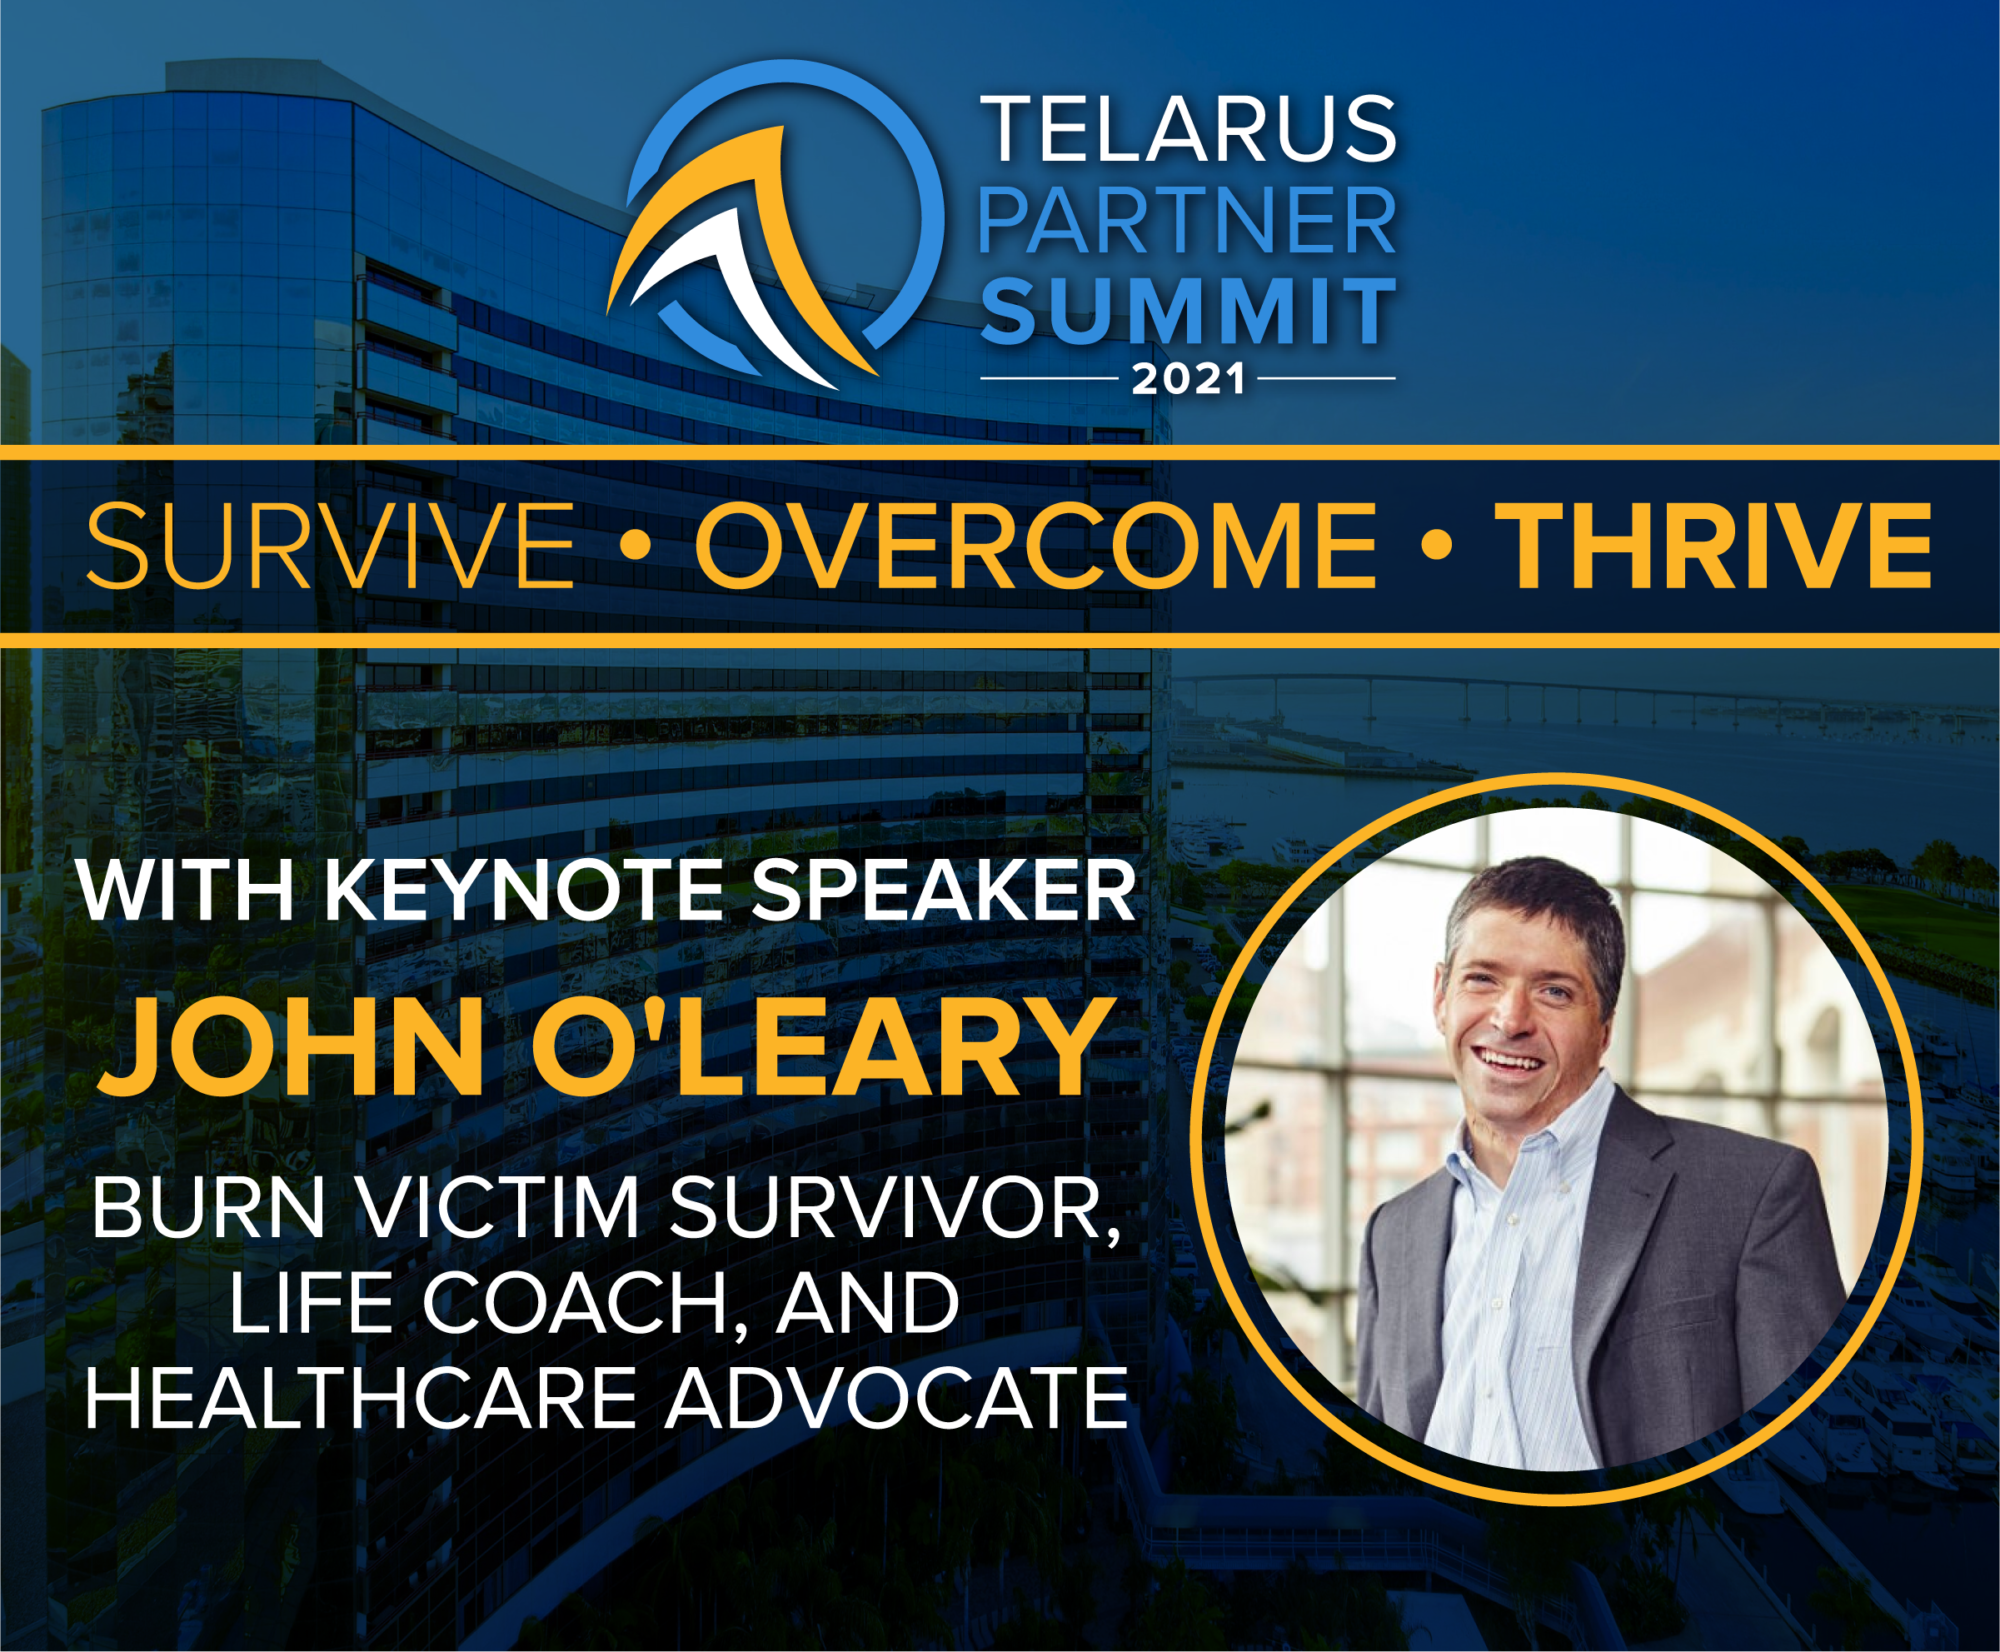 John O’Leary, Burn Victim Survivor, Life Coach, and Healthcare Advocate, to Speak at Telarus Partner Summit